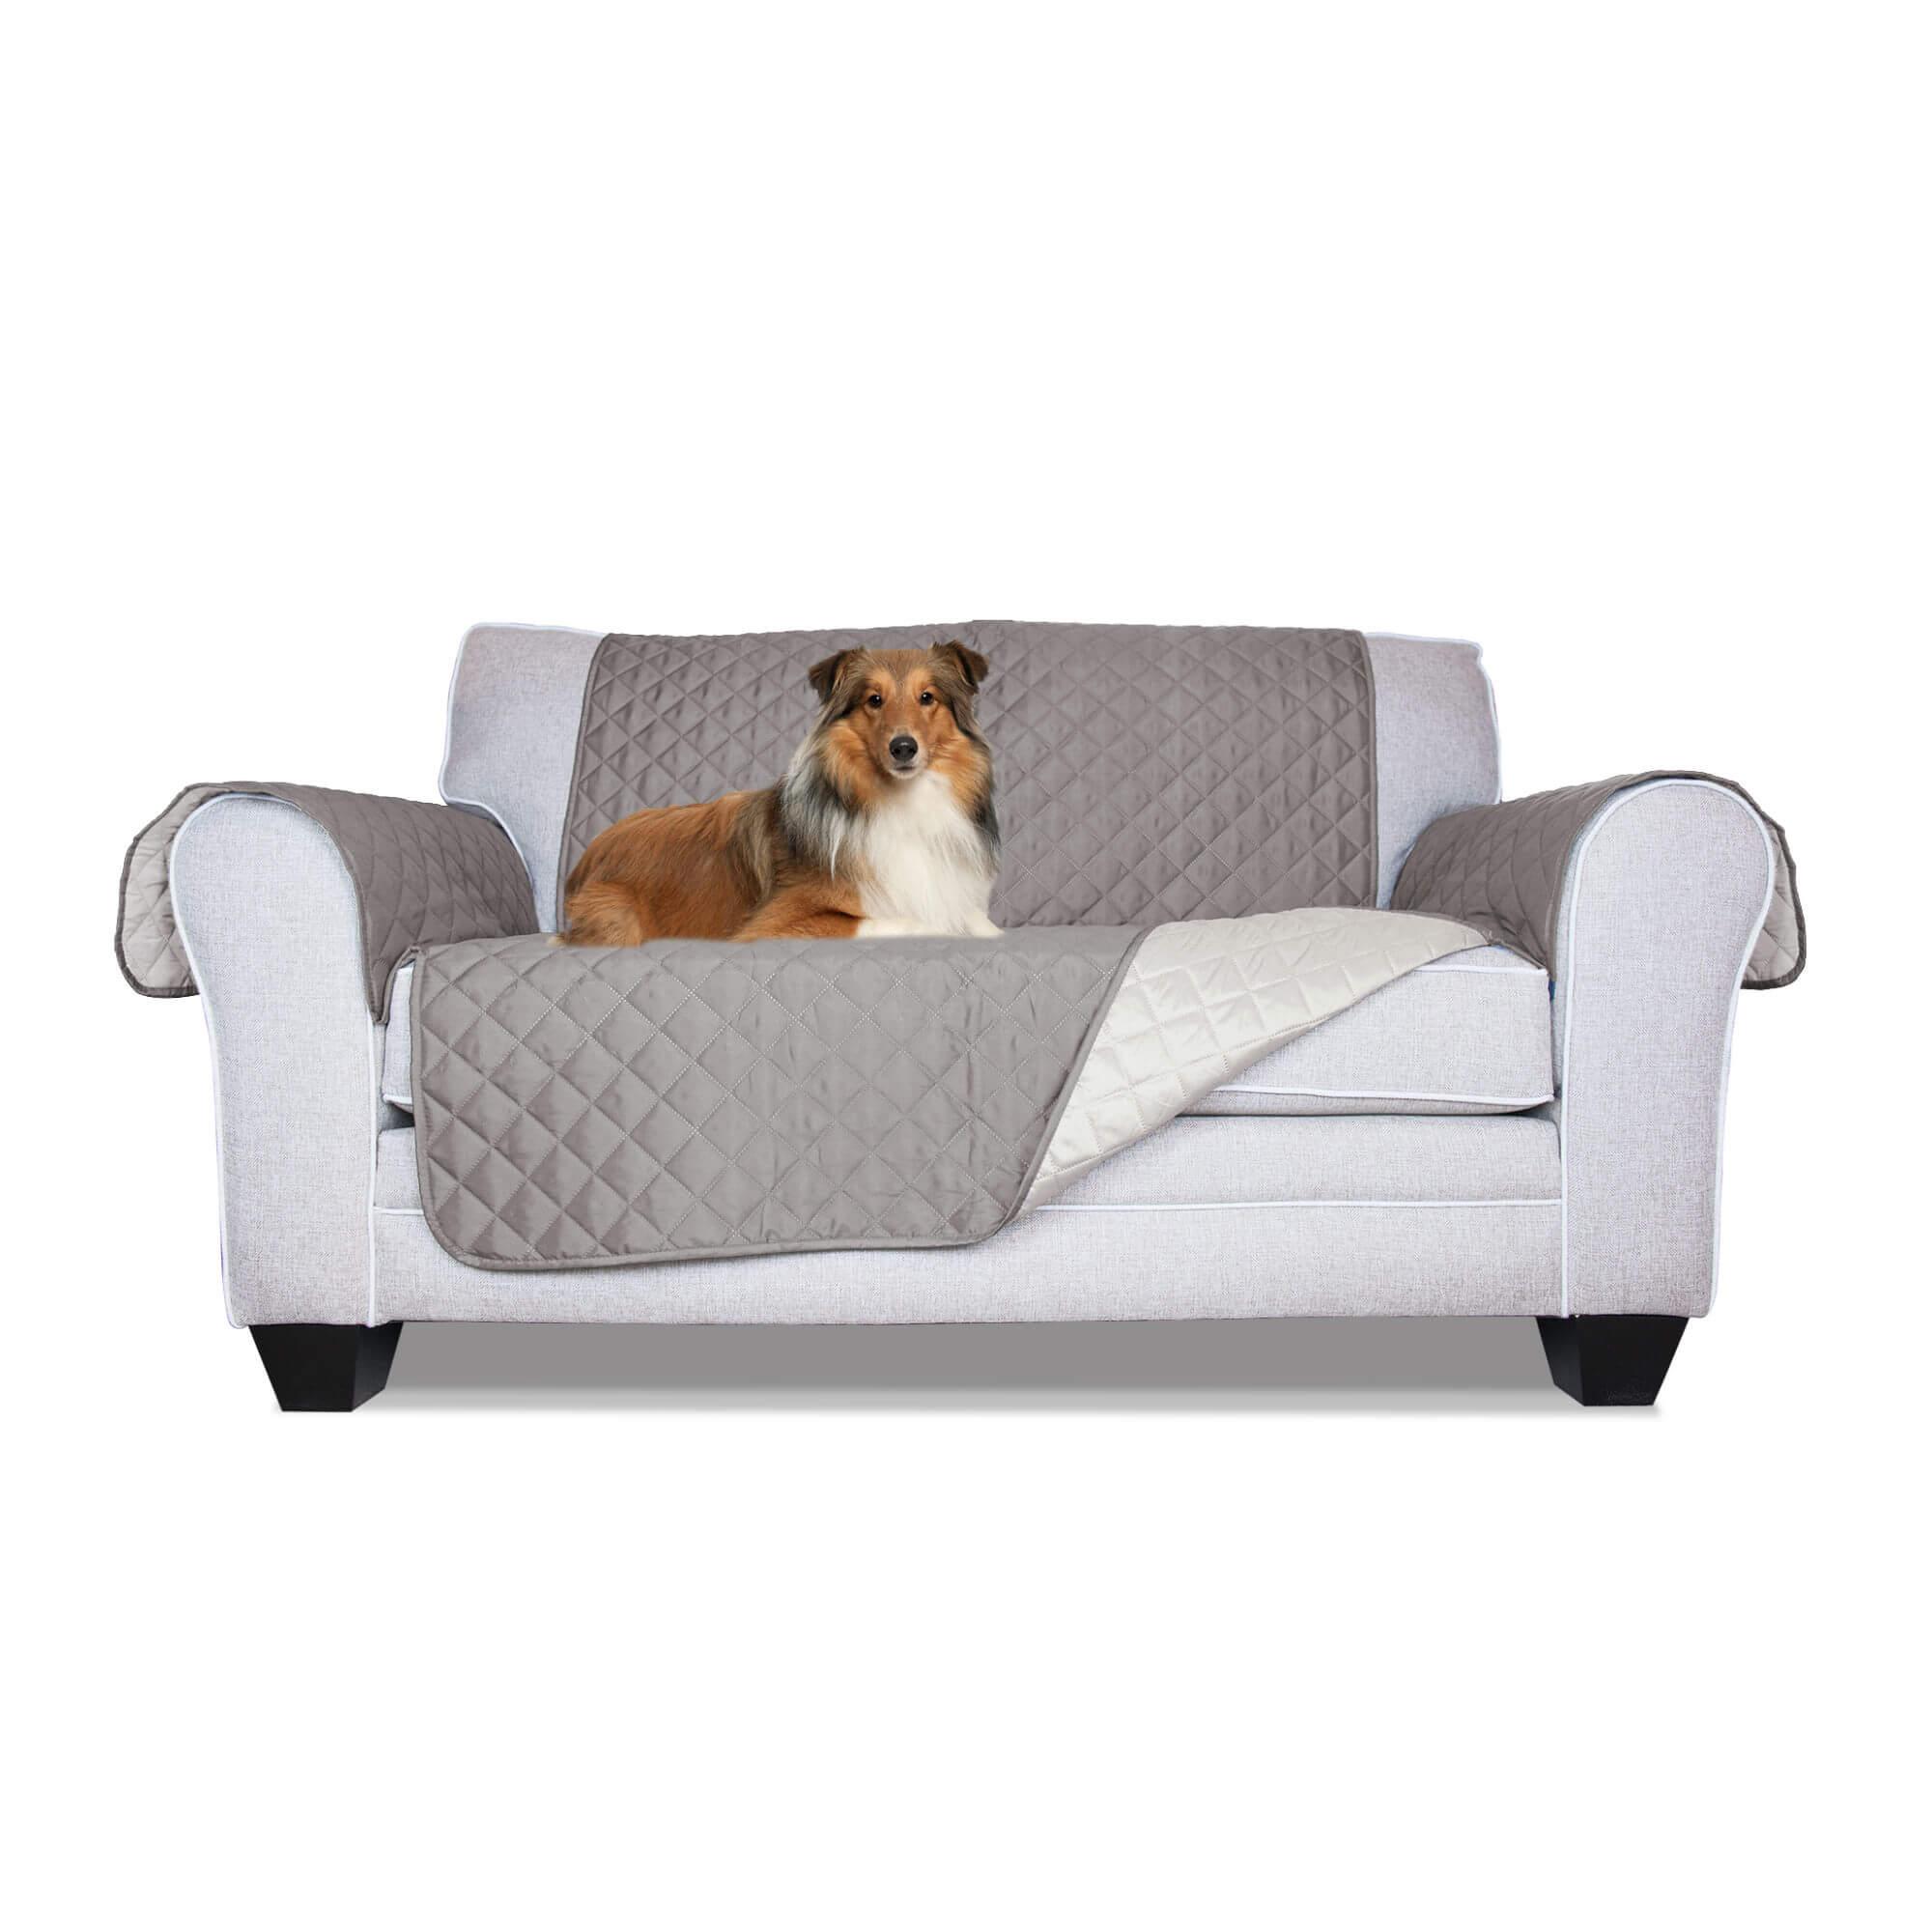 FurHaven Reversible Loveseat Protector - Pet Furniture Cover